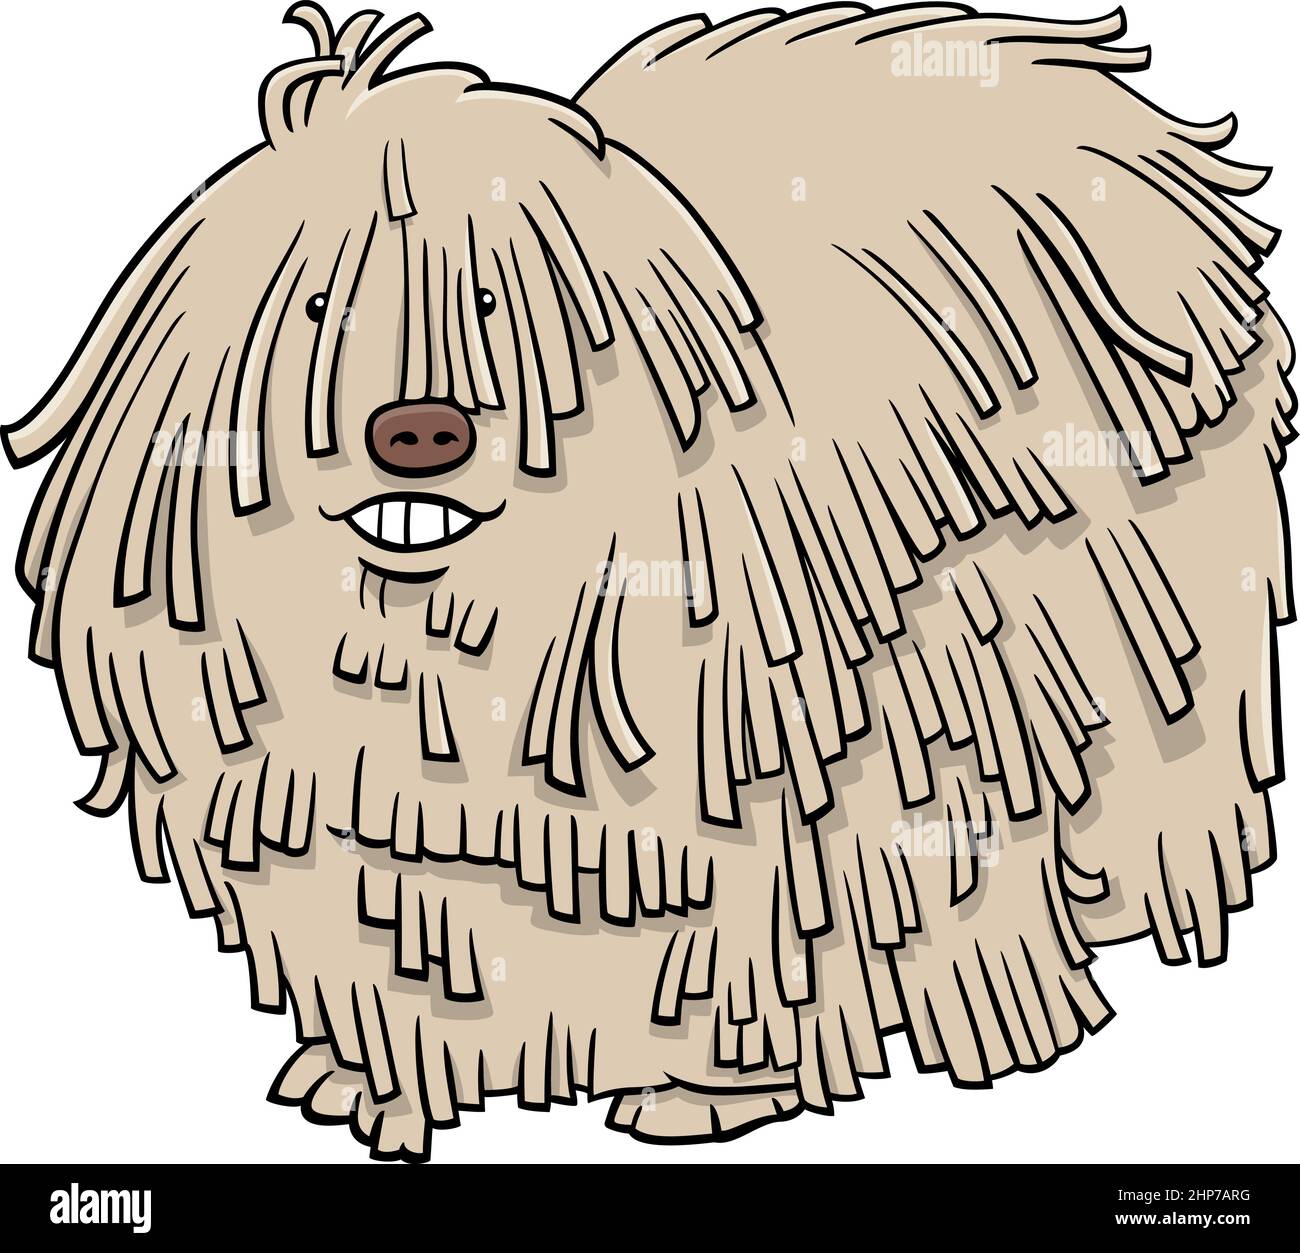 cartoon komondor or Hungarian sheepdog purebred dog Stock Vector